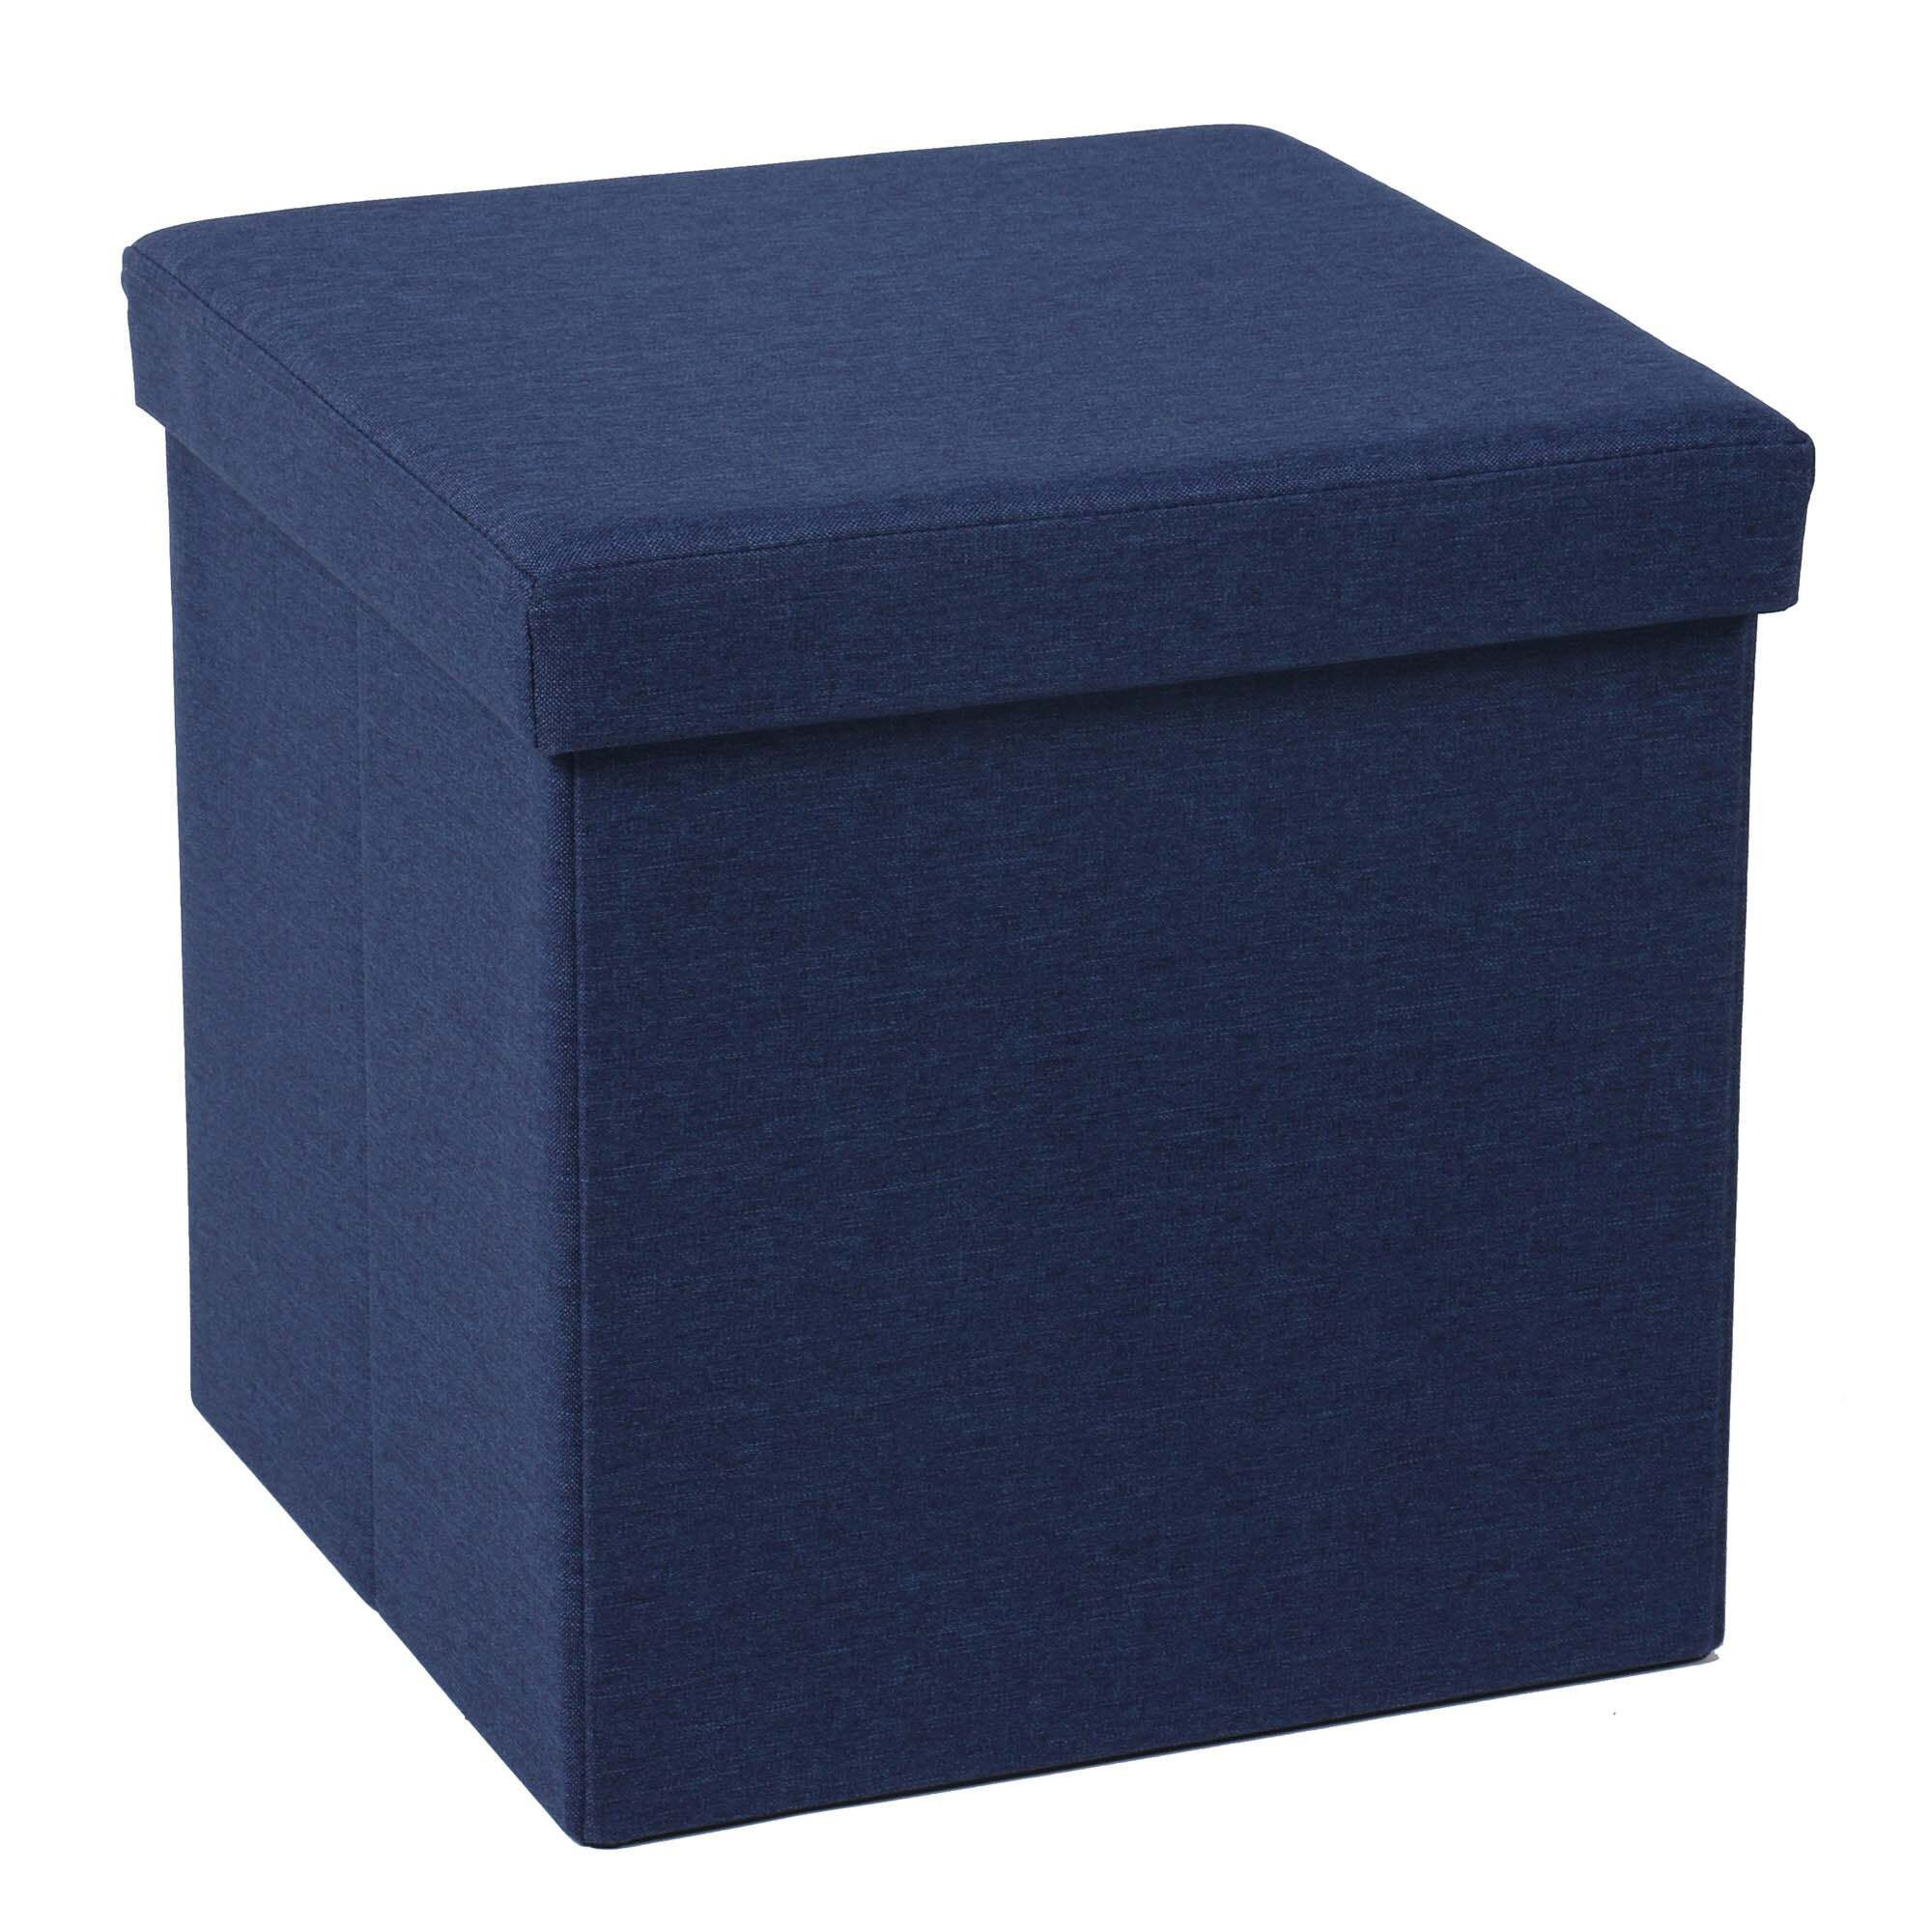 Faux Linen Cube Ottoman Navy Navy Blue